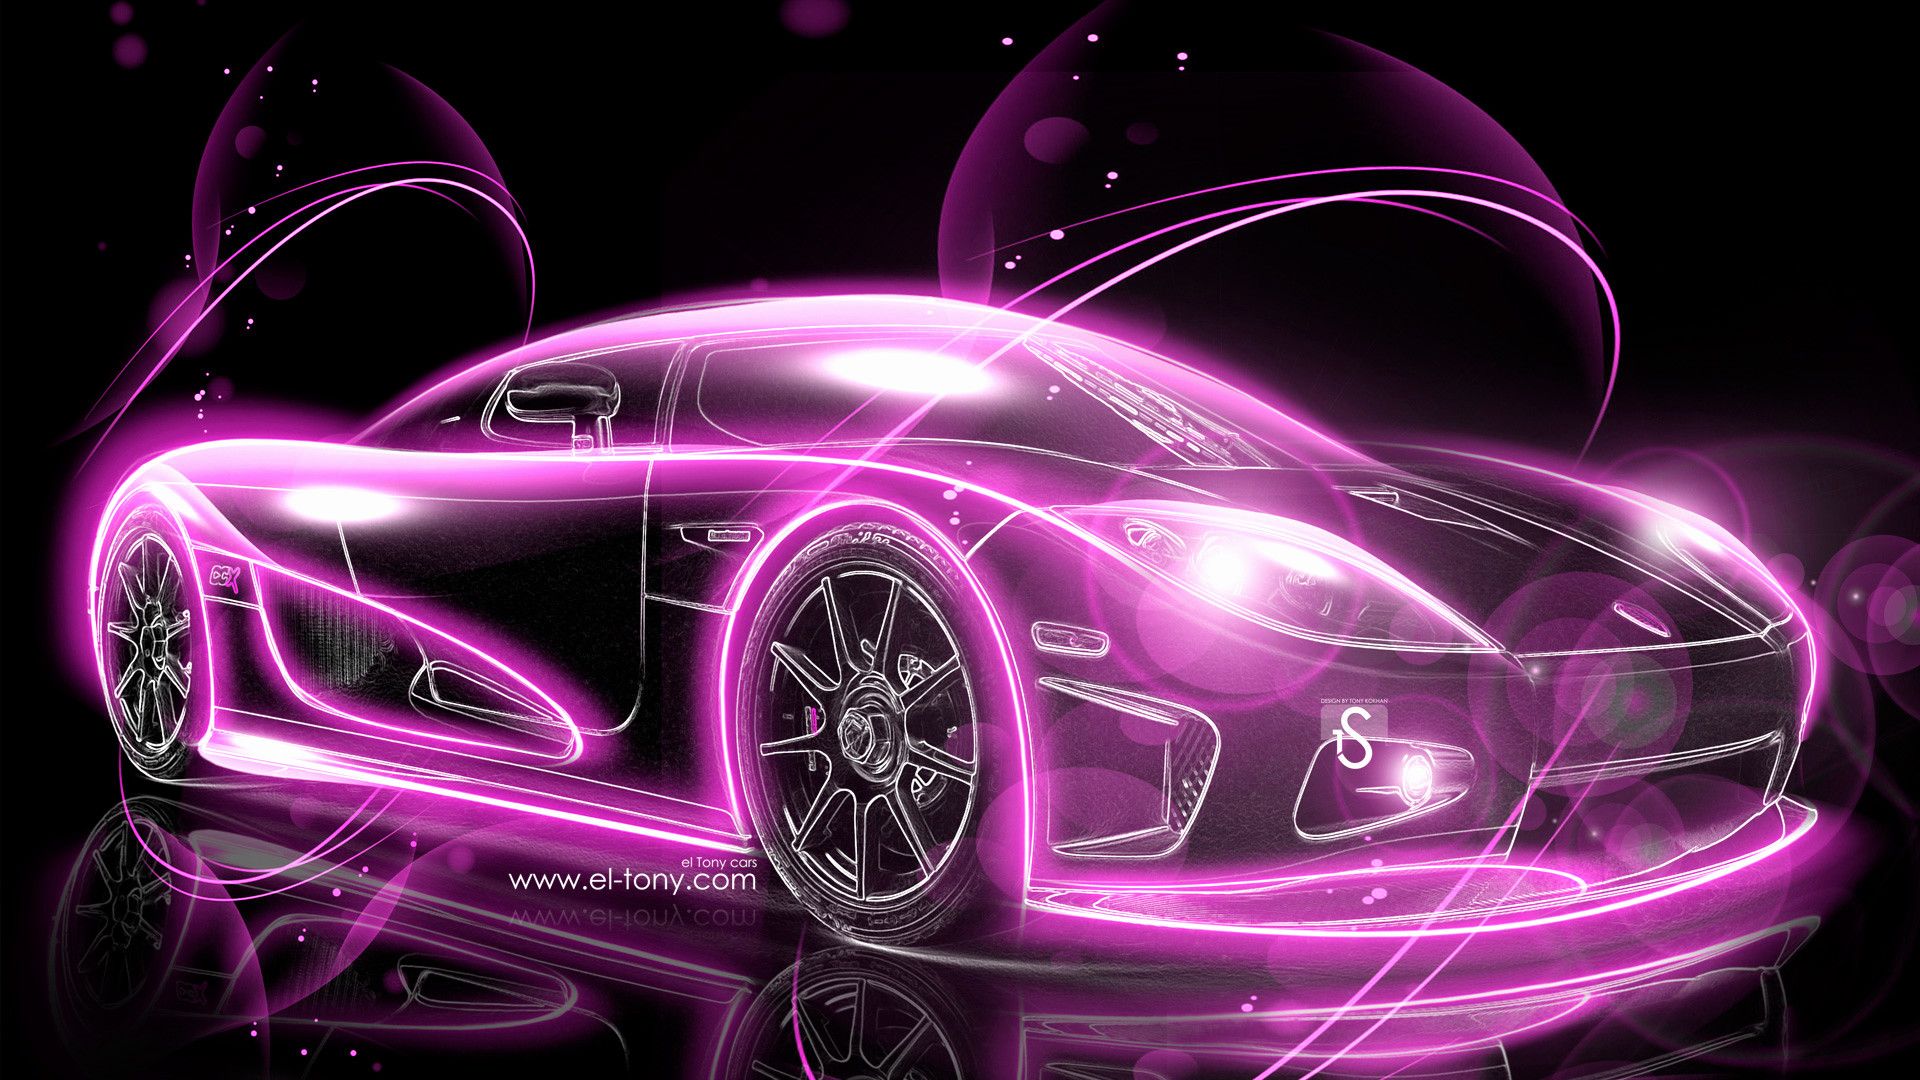 Cool Wallpaper Car. mywallpaper site. Cool wallpaper cars, Pink car, Logo wallpaper hd